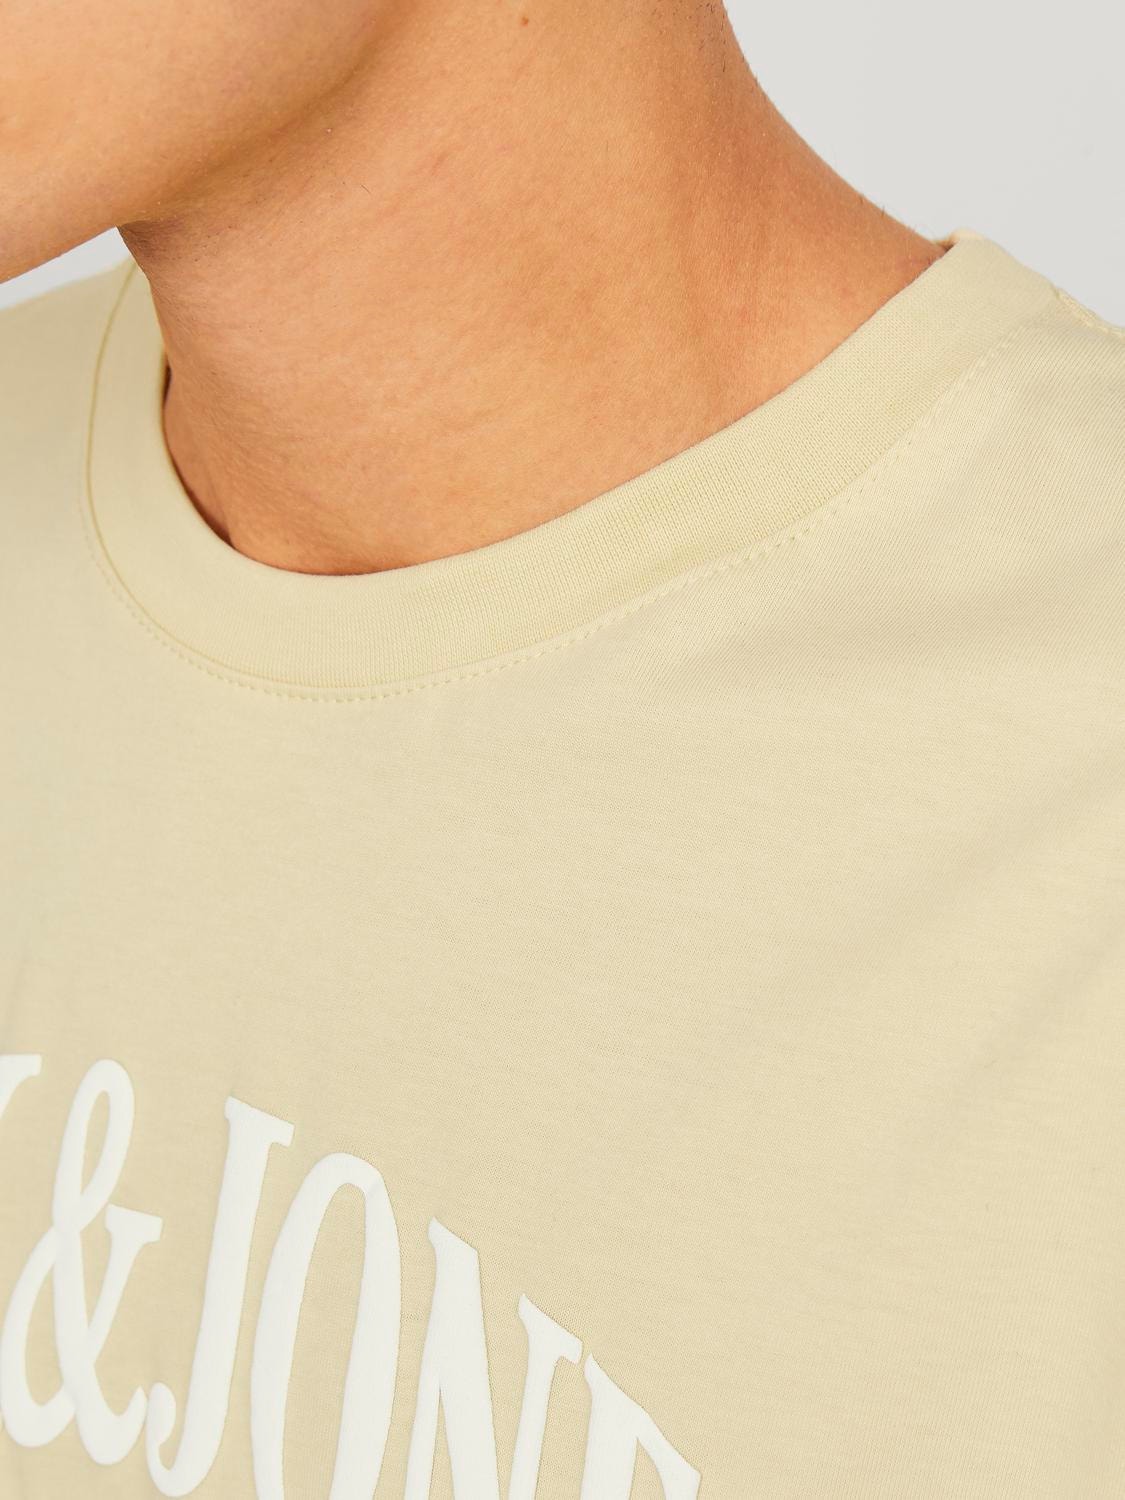 Jack & Jones Printed Crew neck T-shirt -Italian Straw - 12251899